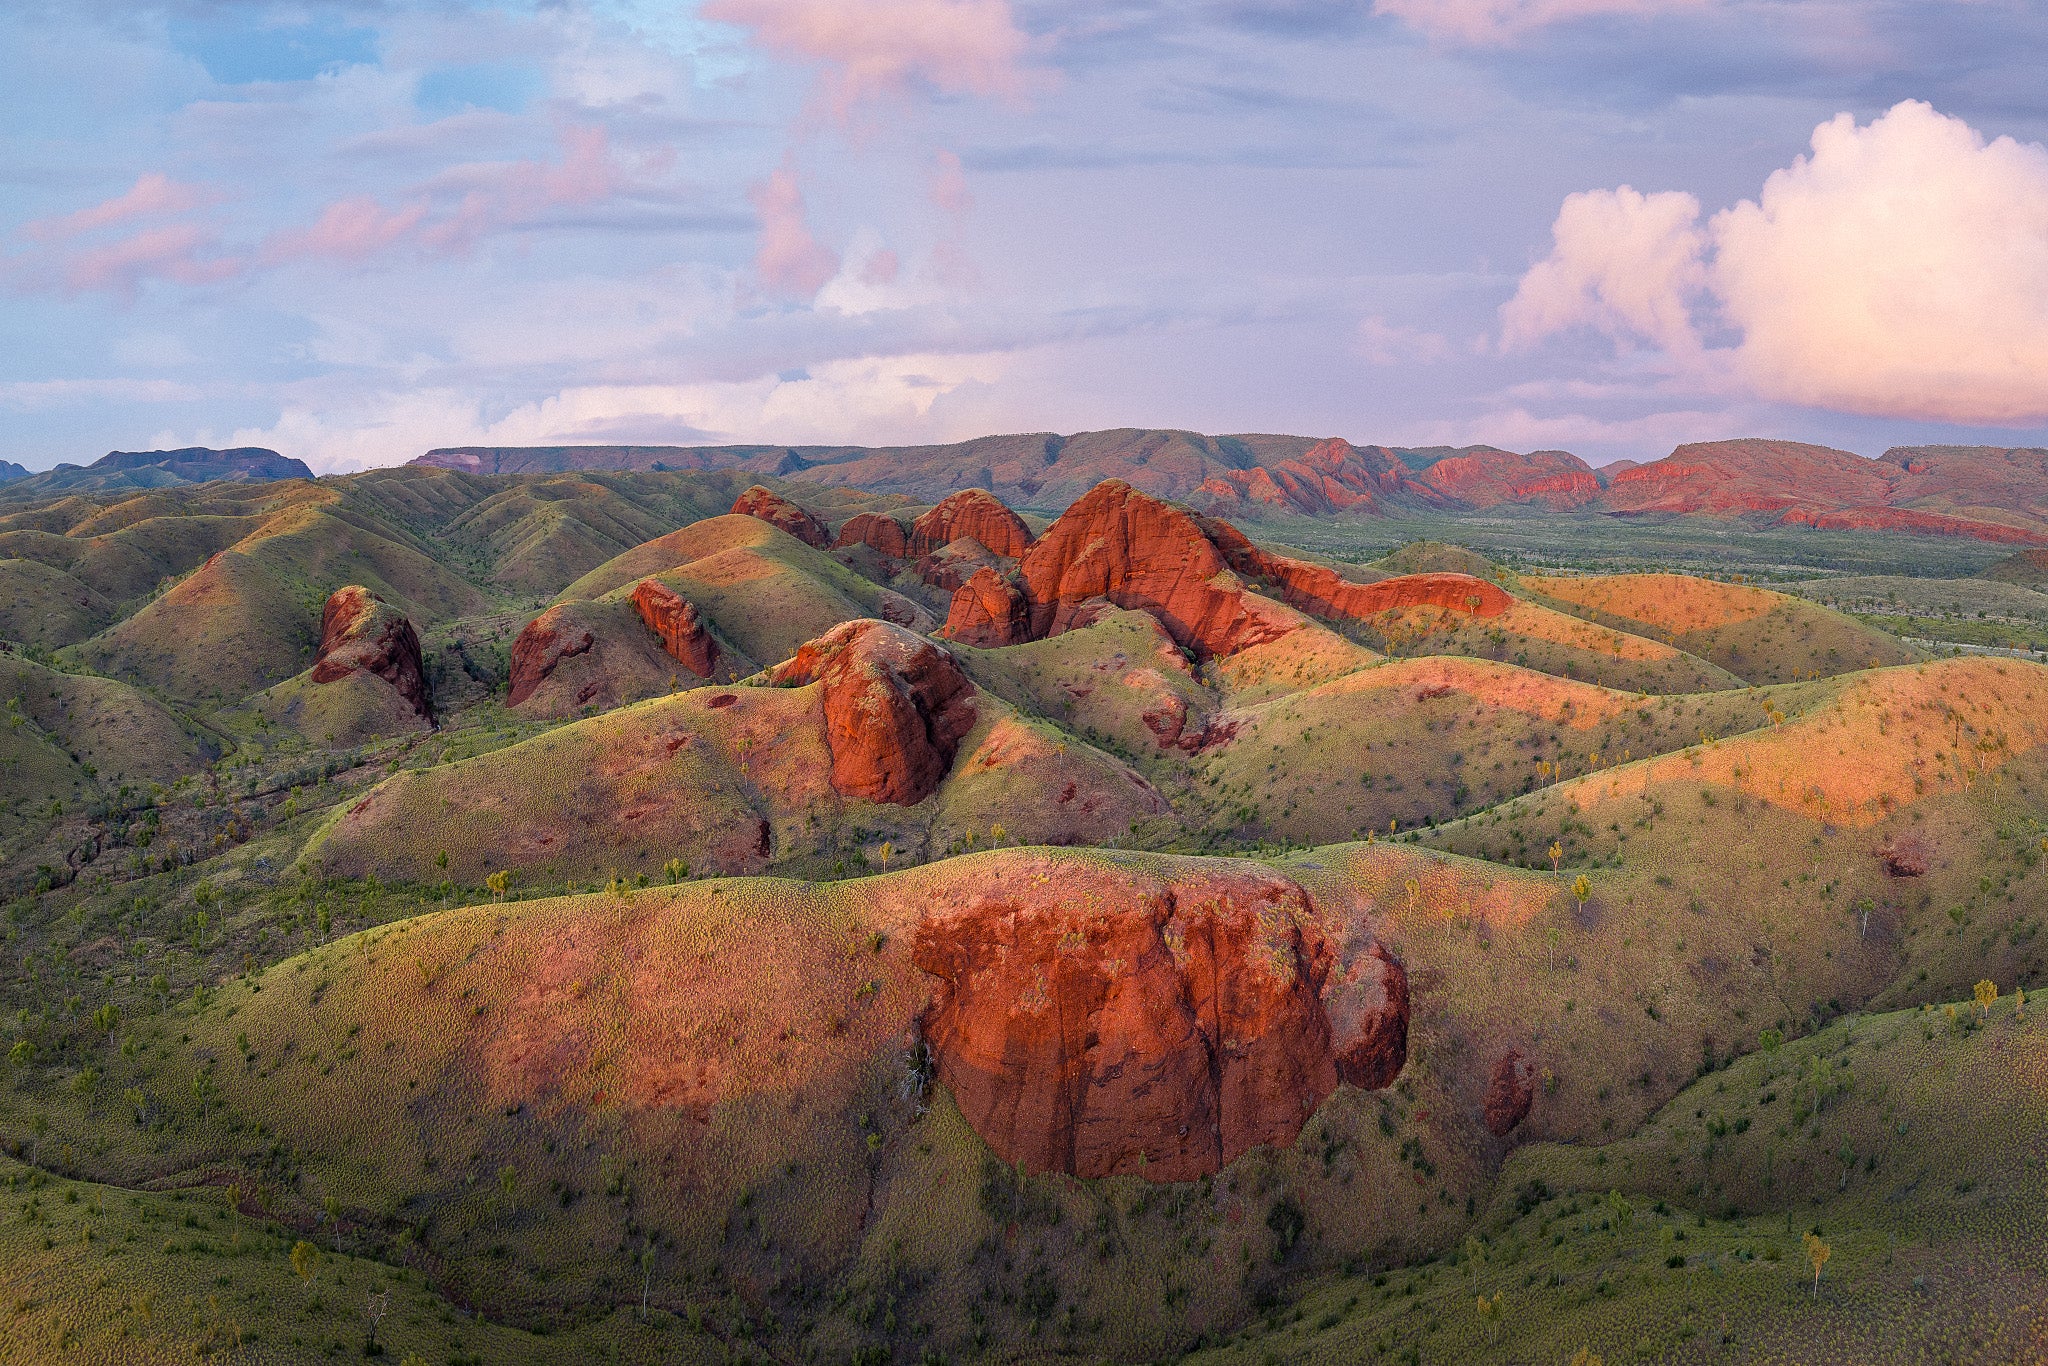 sunrise over a mountain range in the kimberley region of western australia